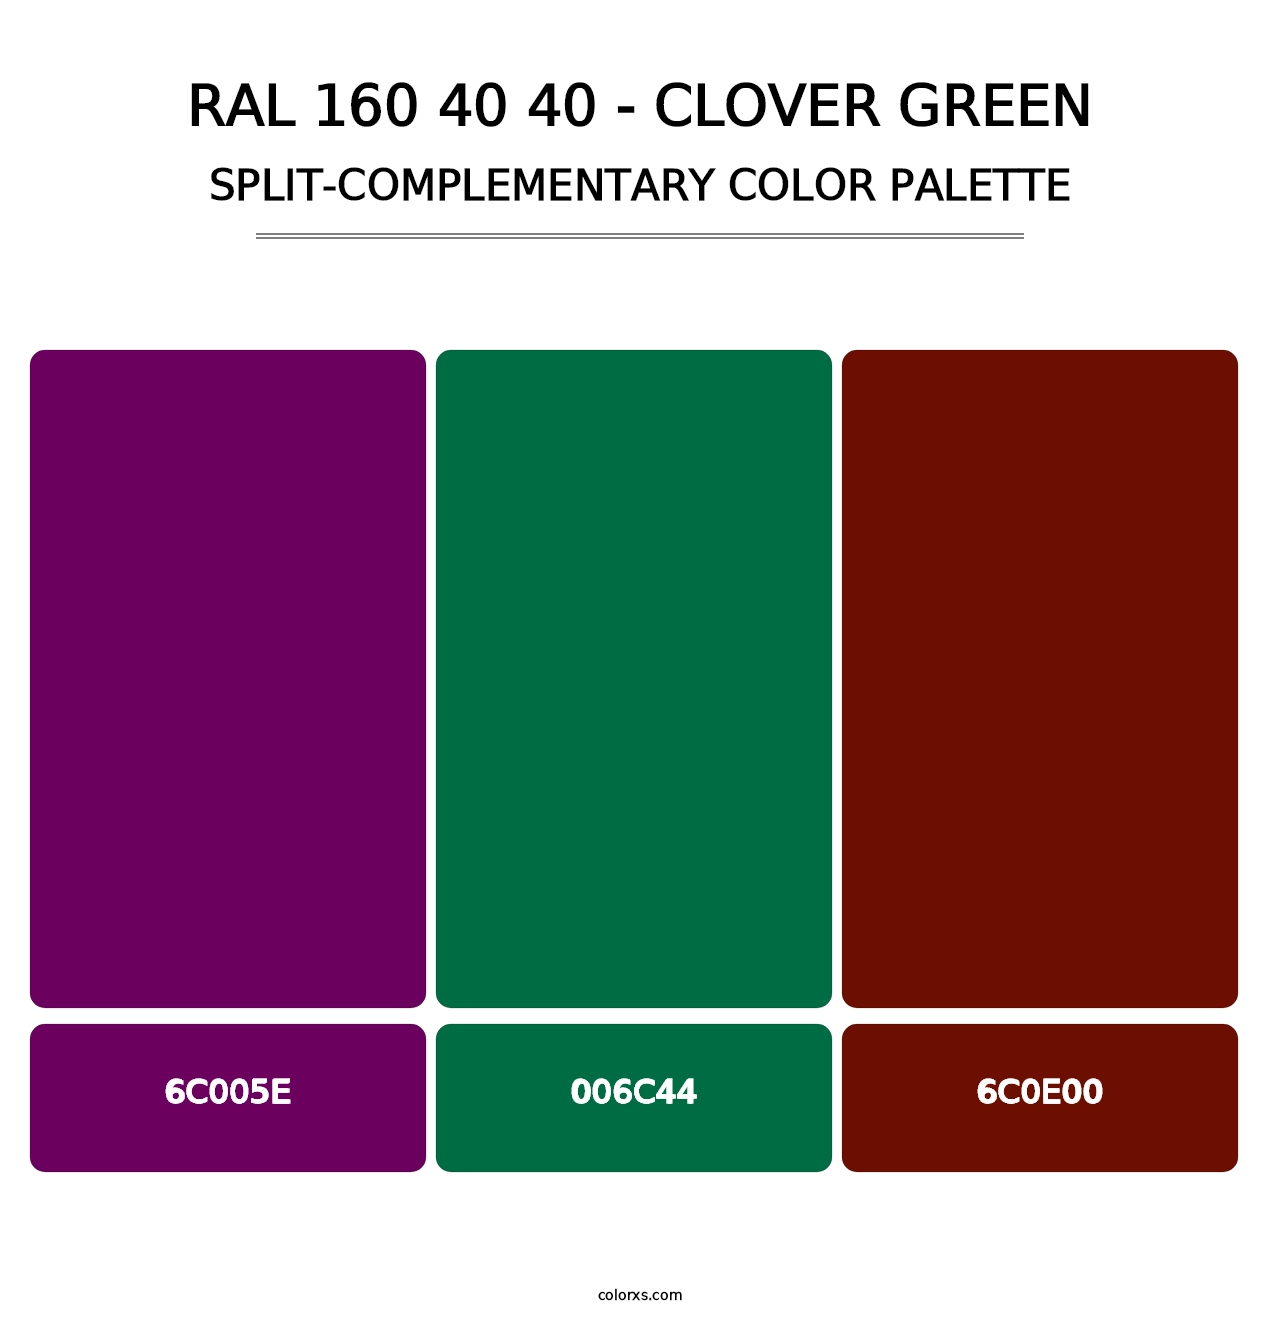 RAL 160 40 40 - Clover Green - Split-Complementary Color Palette